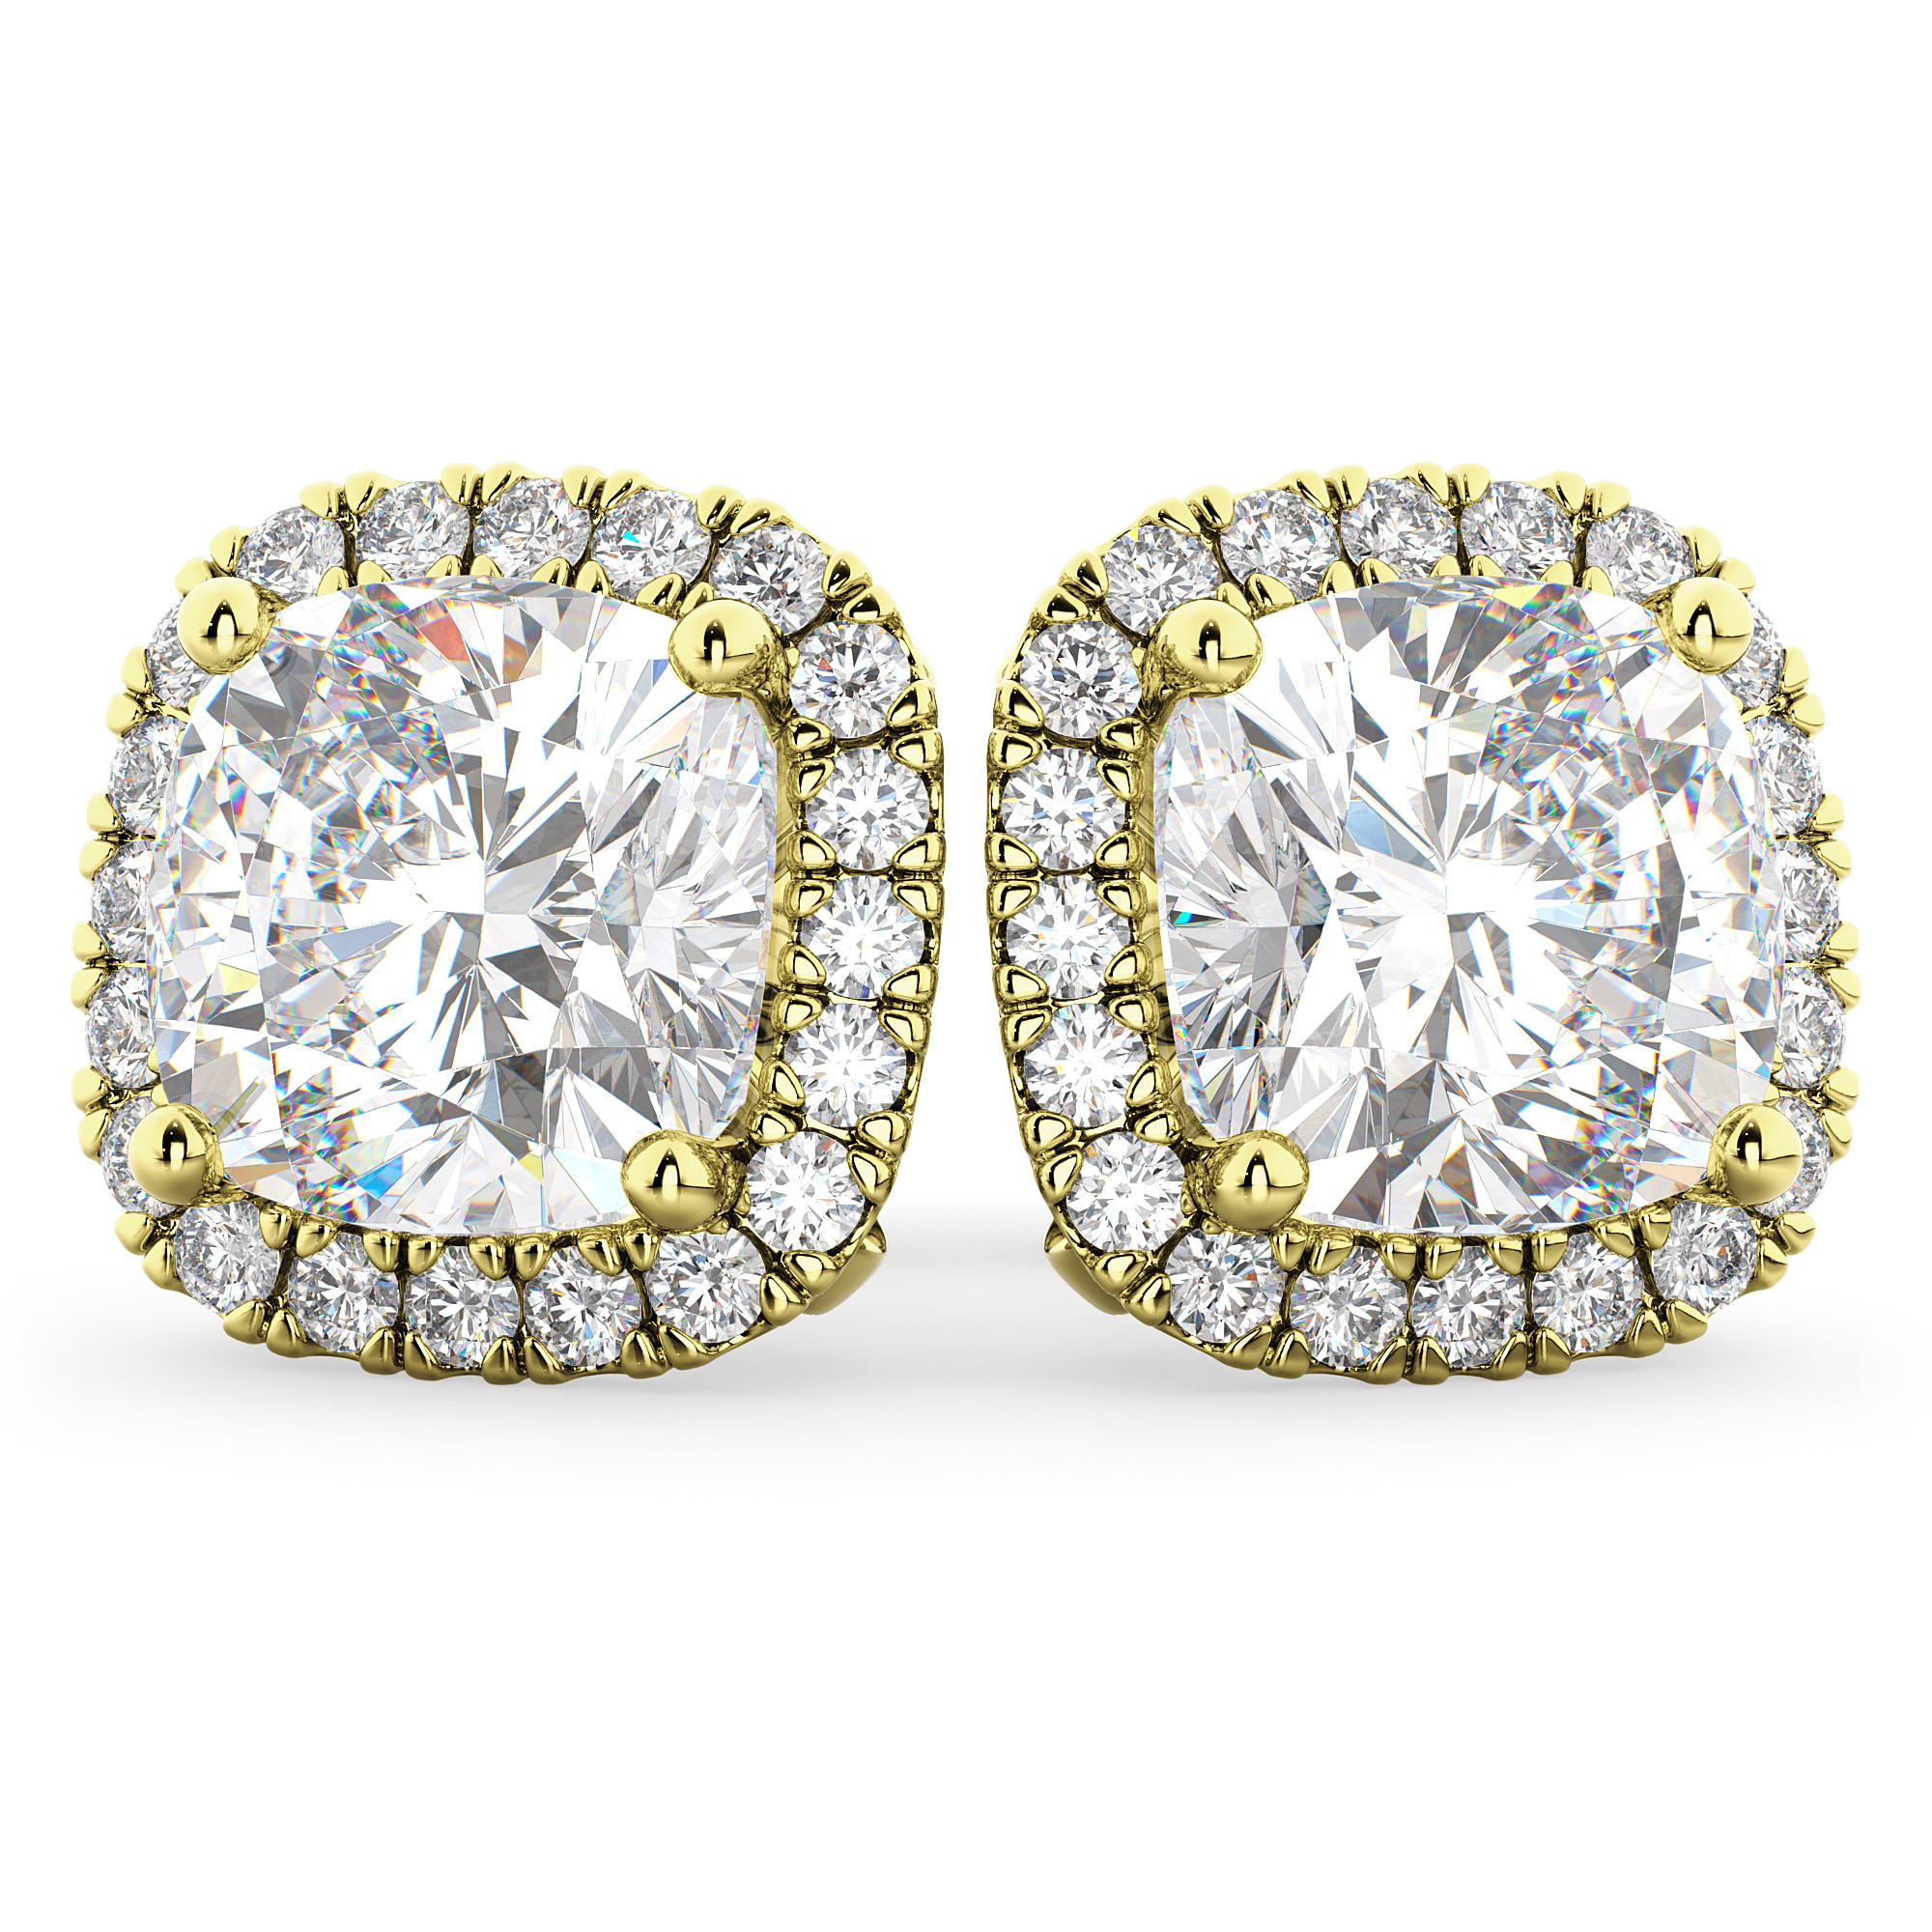 Halo Cushion Moissanite & Diamond Earrings 14k Yellow Gold (3.52ct)